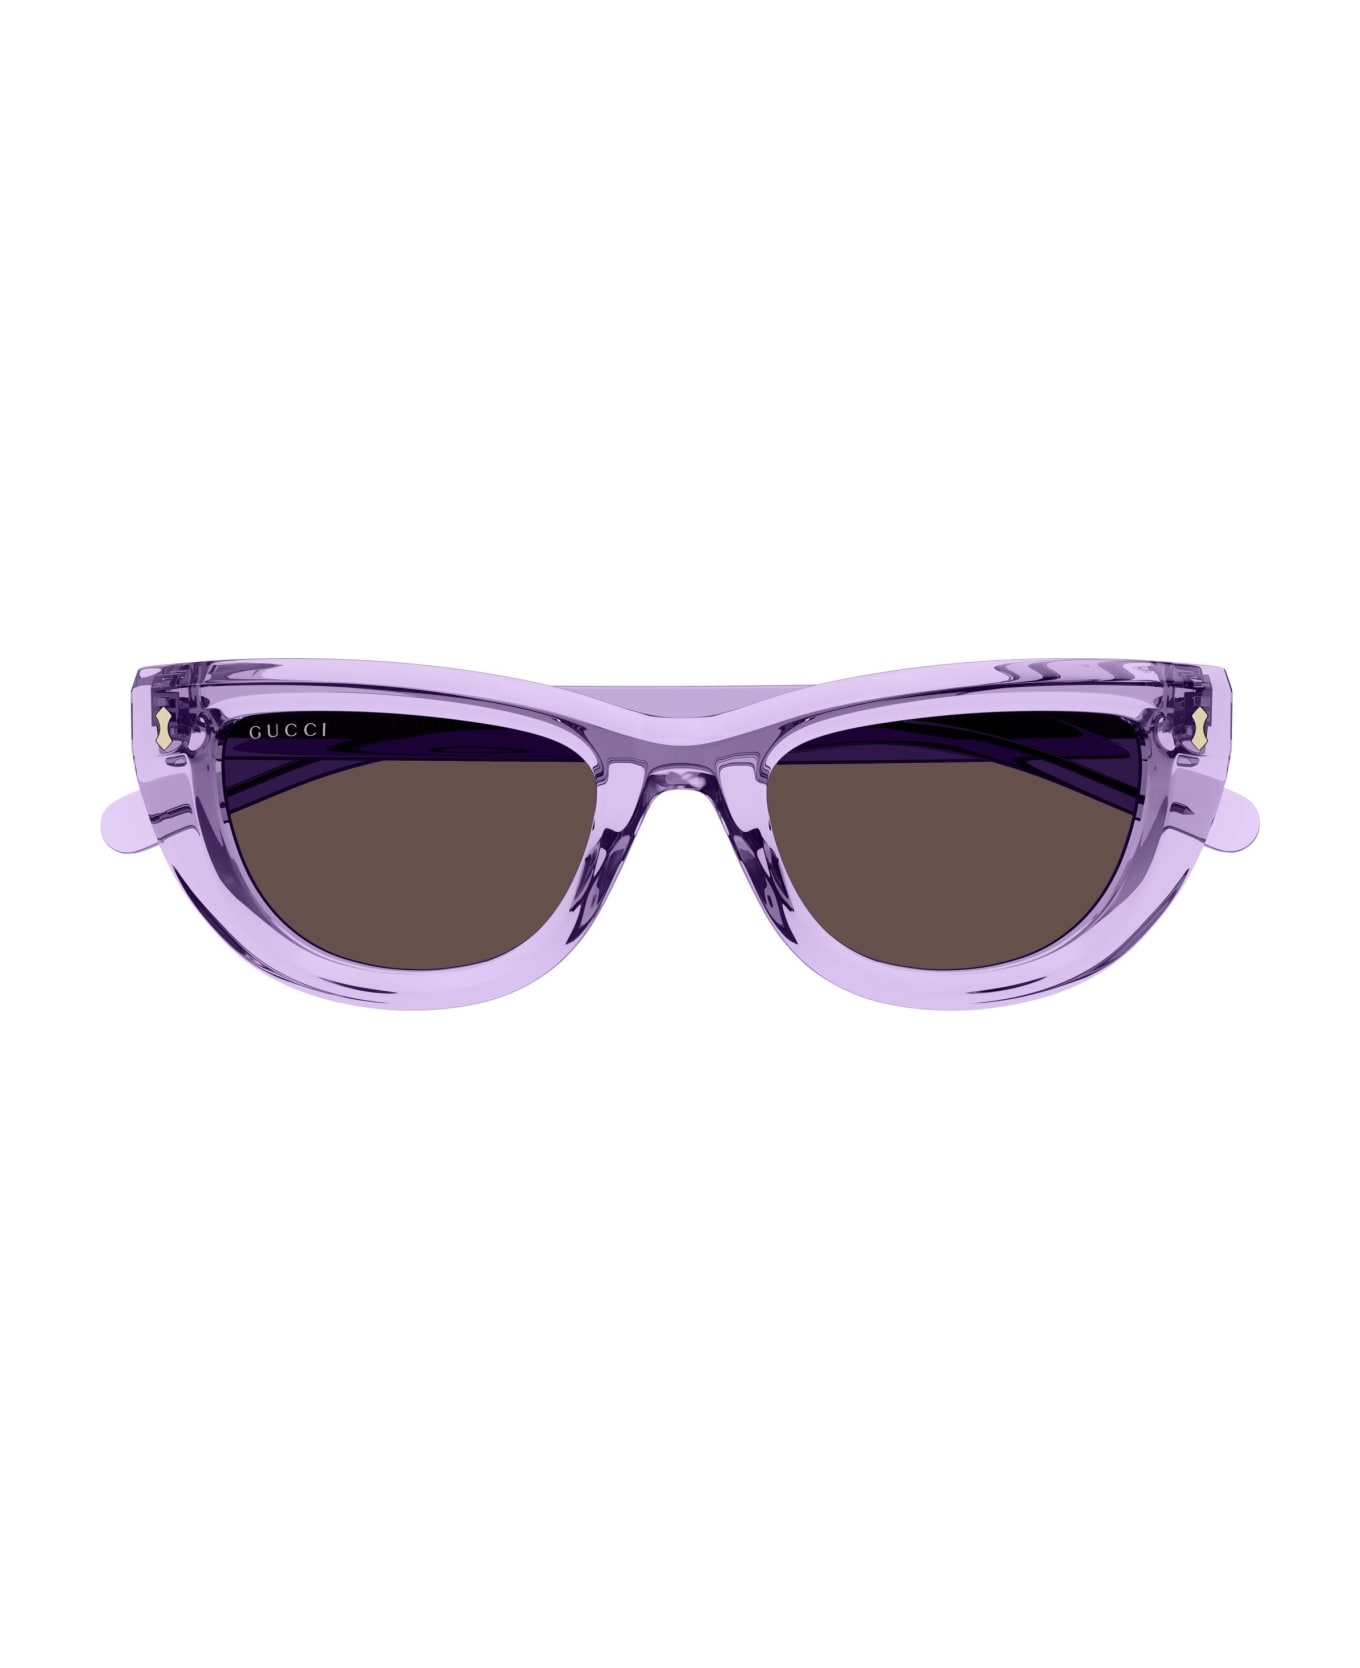 Gucci Eyewear Sunglasses - Viola/Marrone